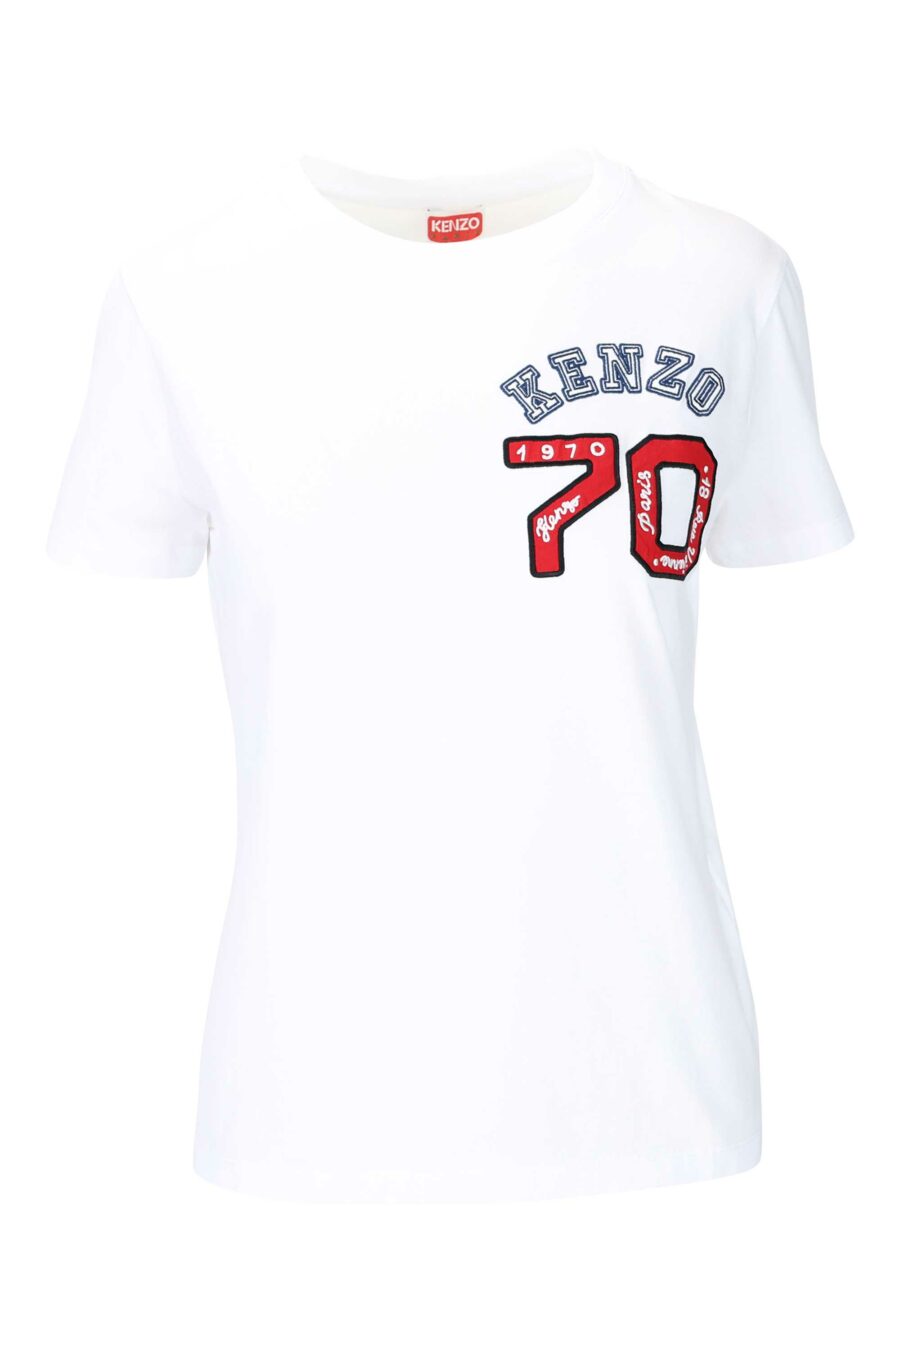 T-shirt branca com o logótipo "Kenzo Academy" - 3612230517073